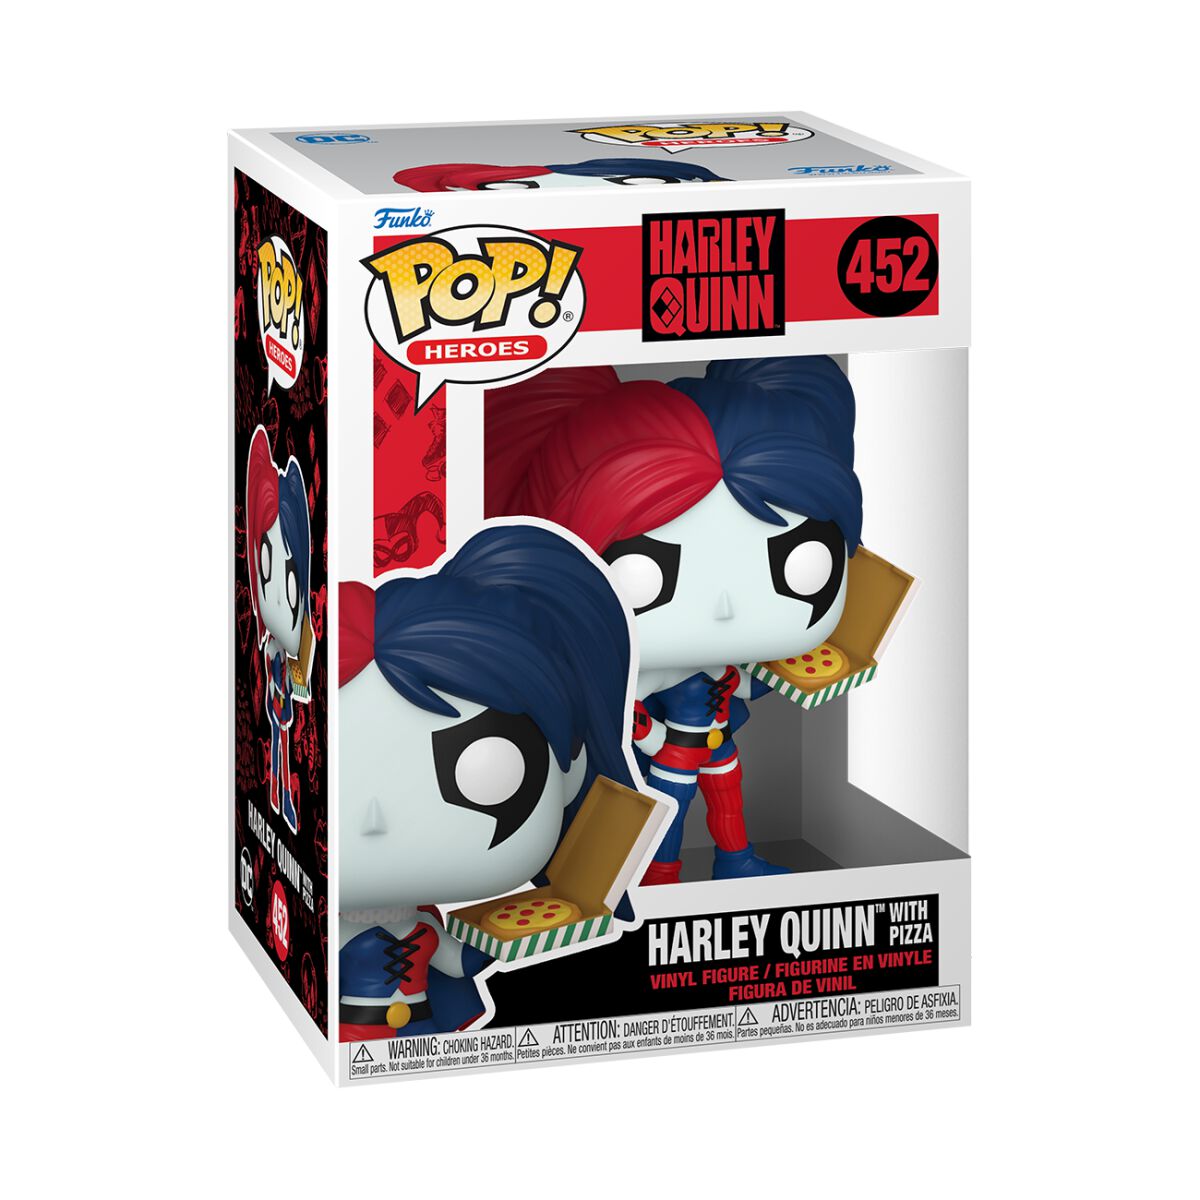 Harley Quinn Harley Quinn with Pizza Vinyl Figur 452 Funko Pop! multicolor von Harley Quinn